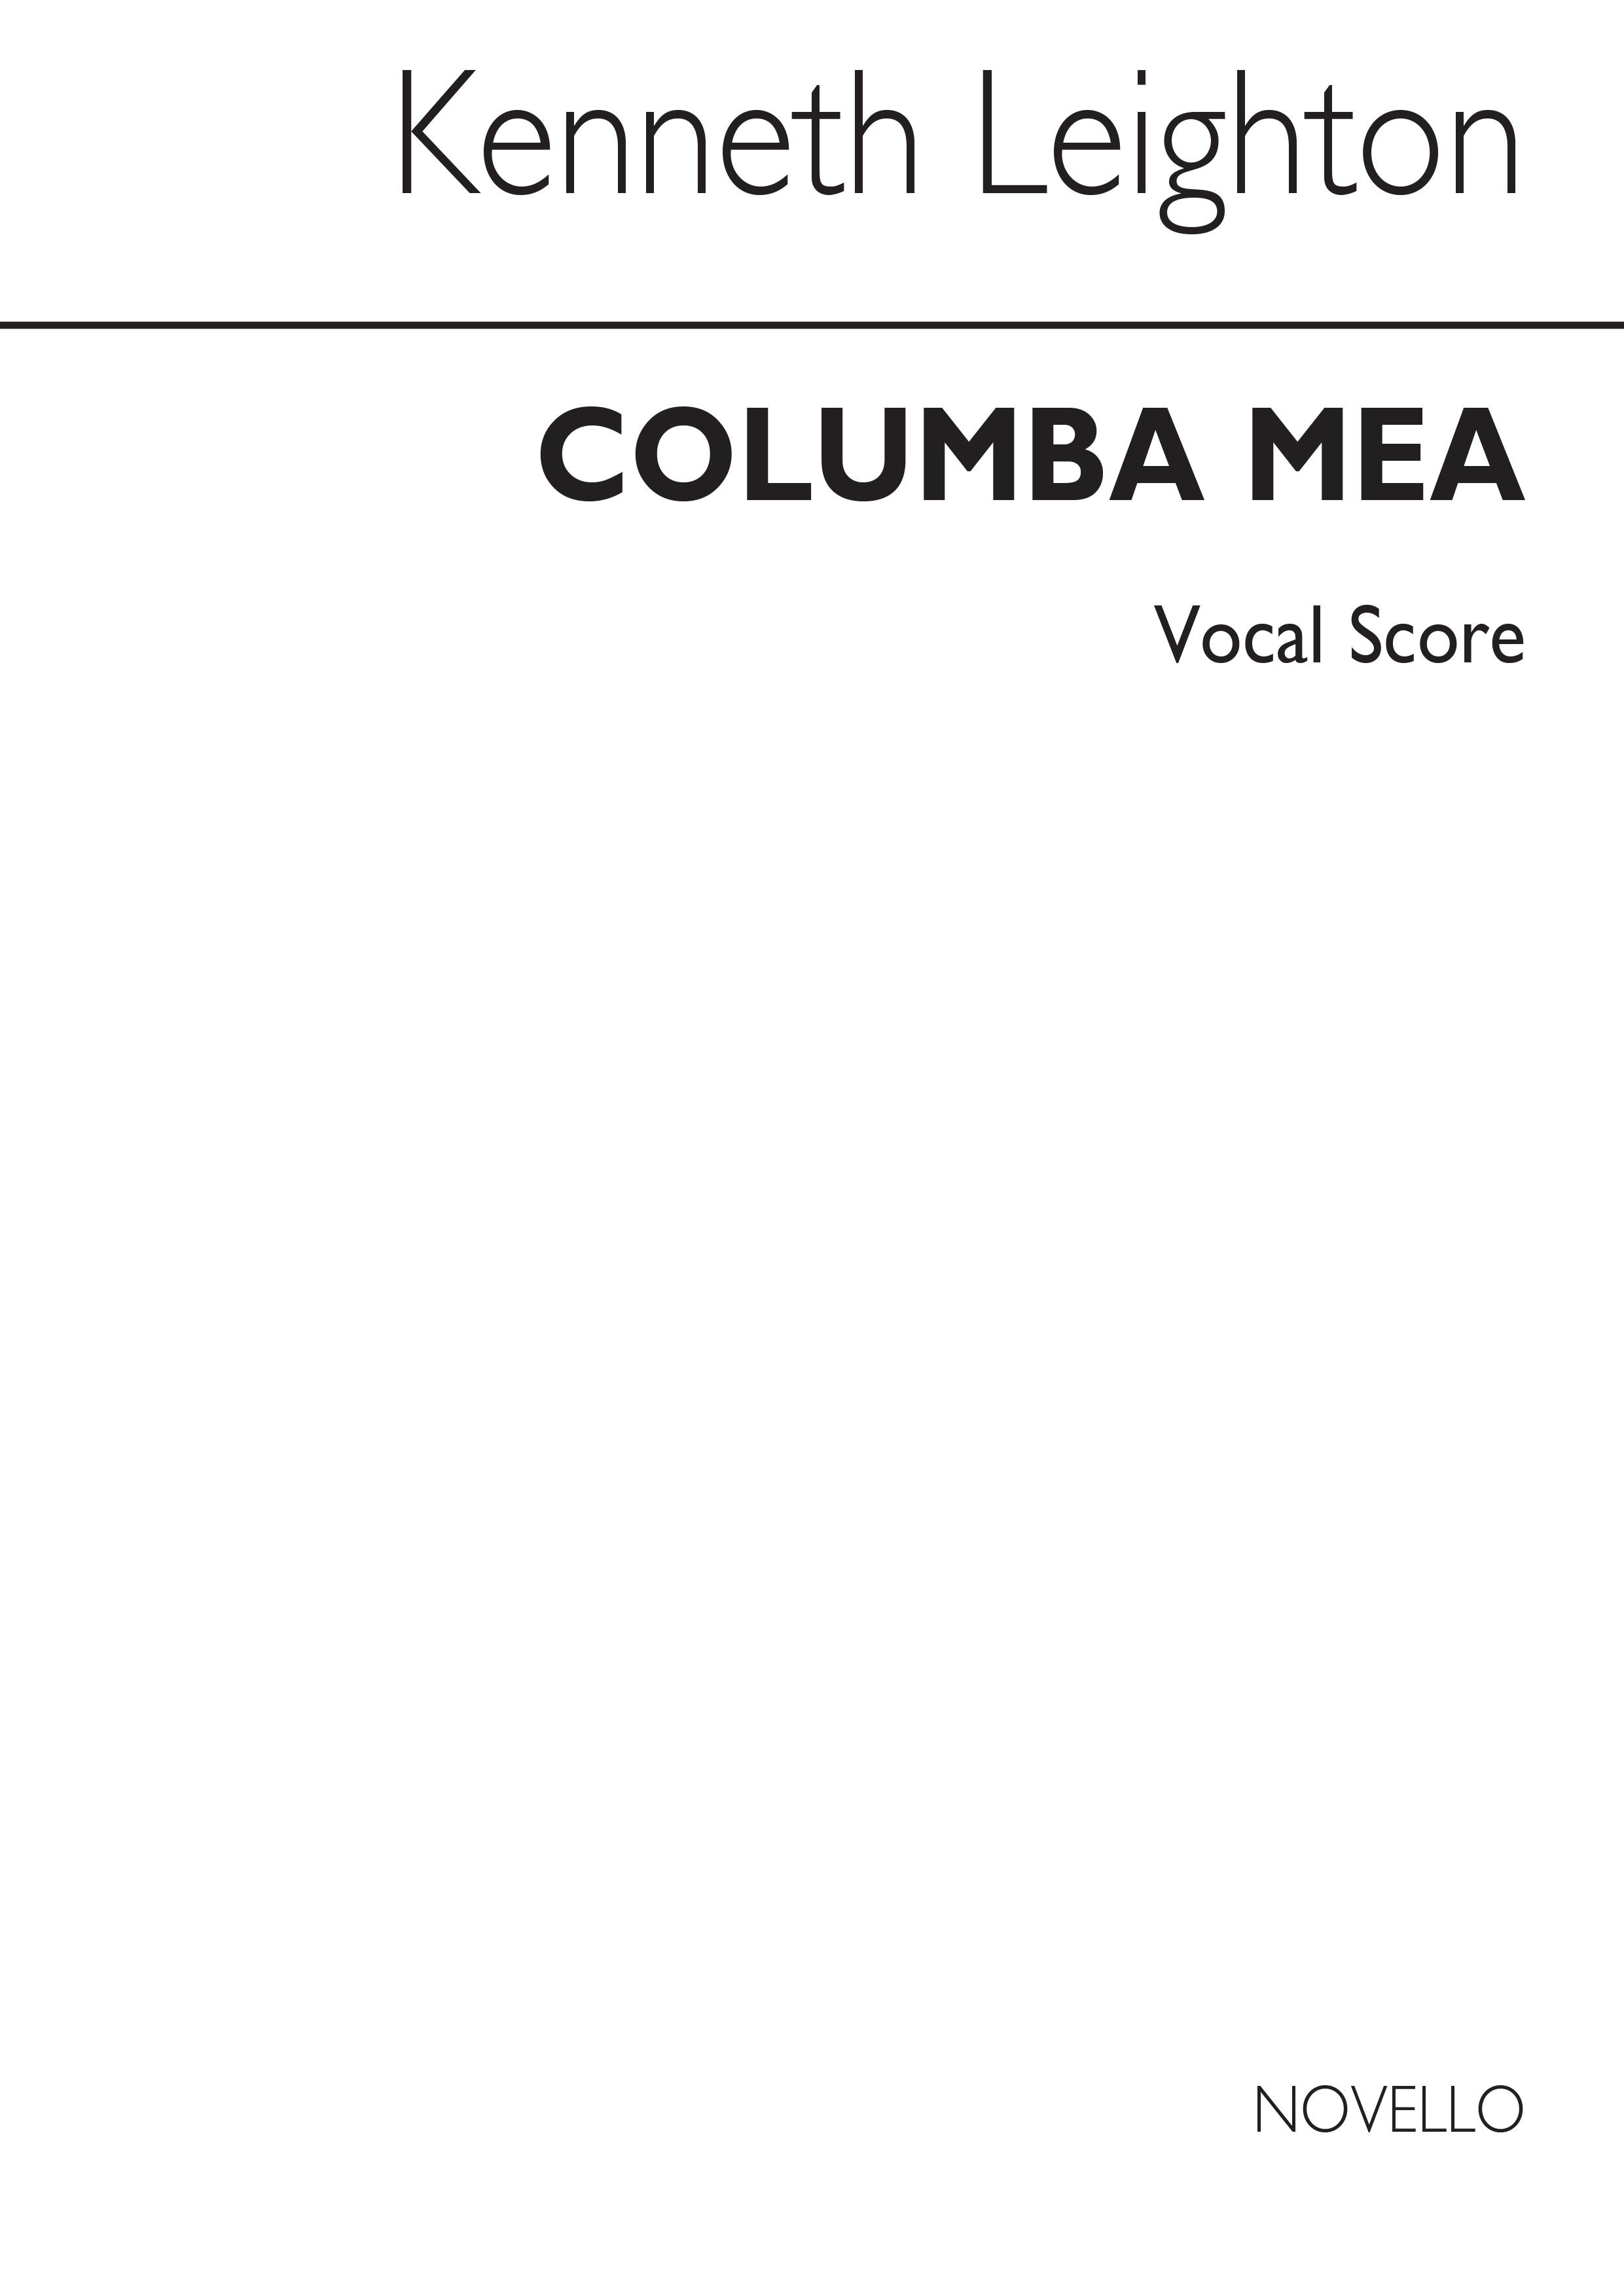 Kenneth Leighton: Columba Mea Op.78 (Vocal Score)